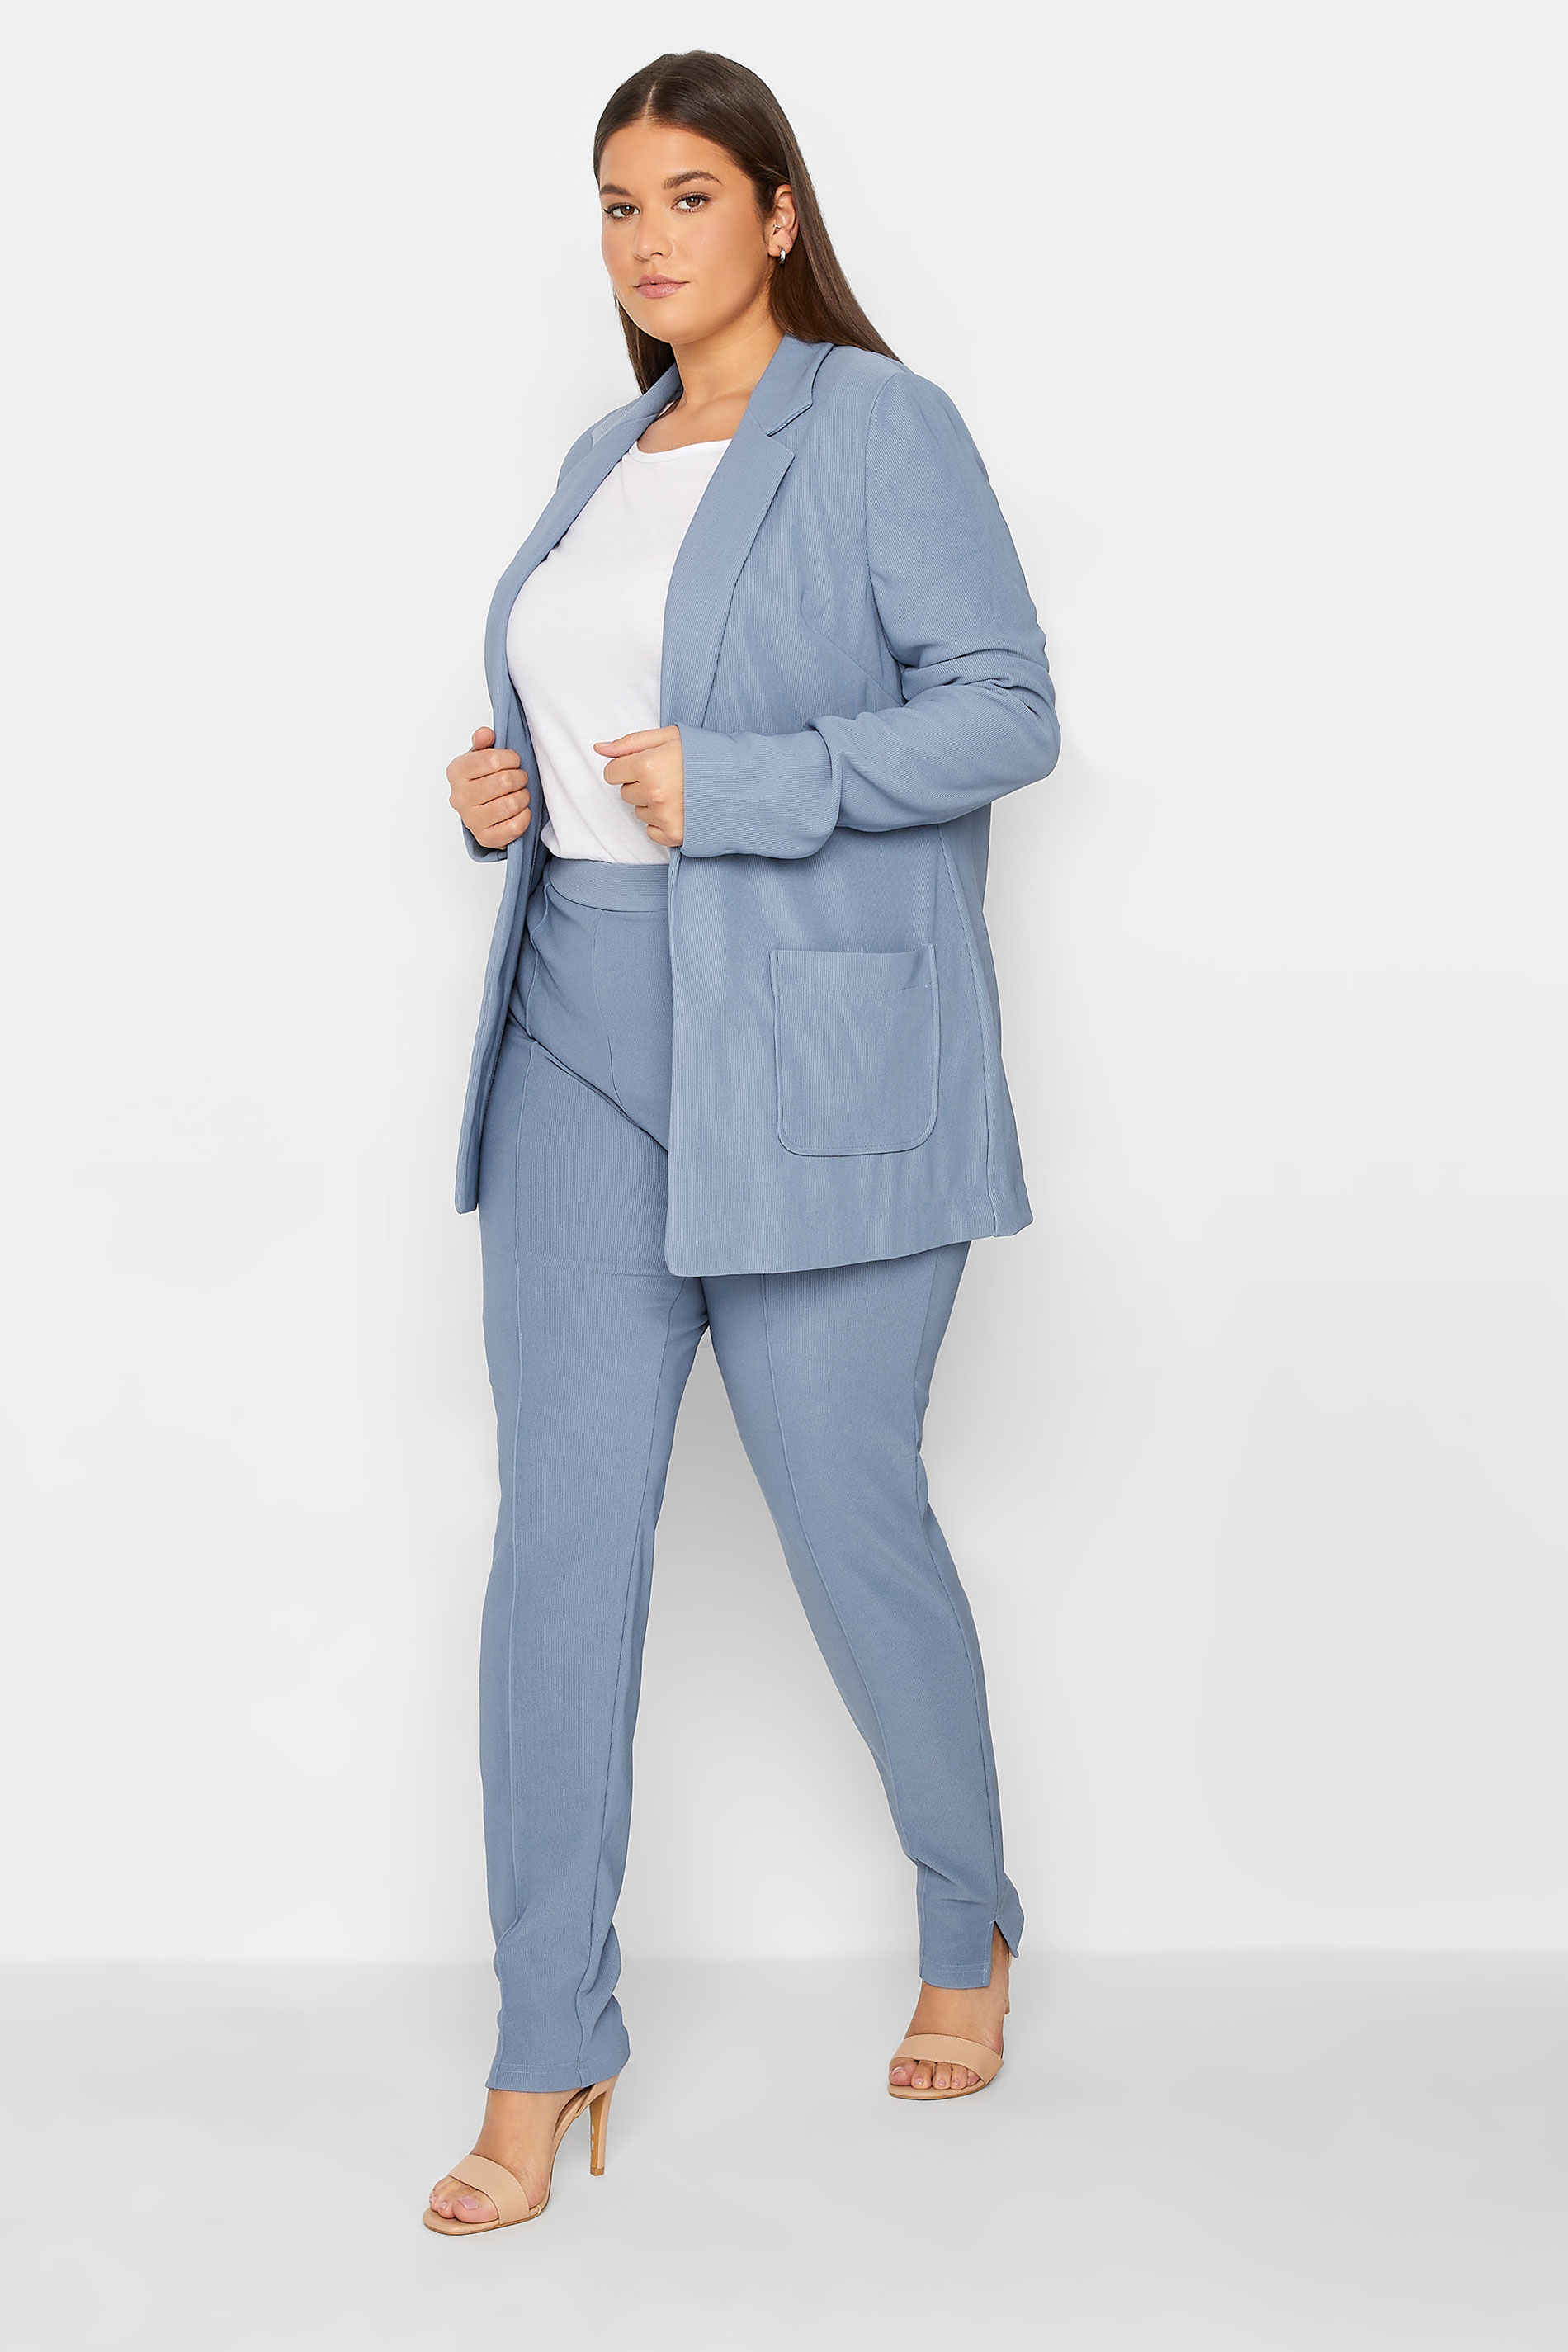 LTS Tall Women's Blue Ribbed Blazer Jacket | Long Tall Sally 2